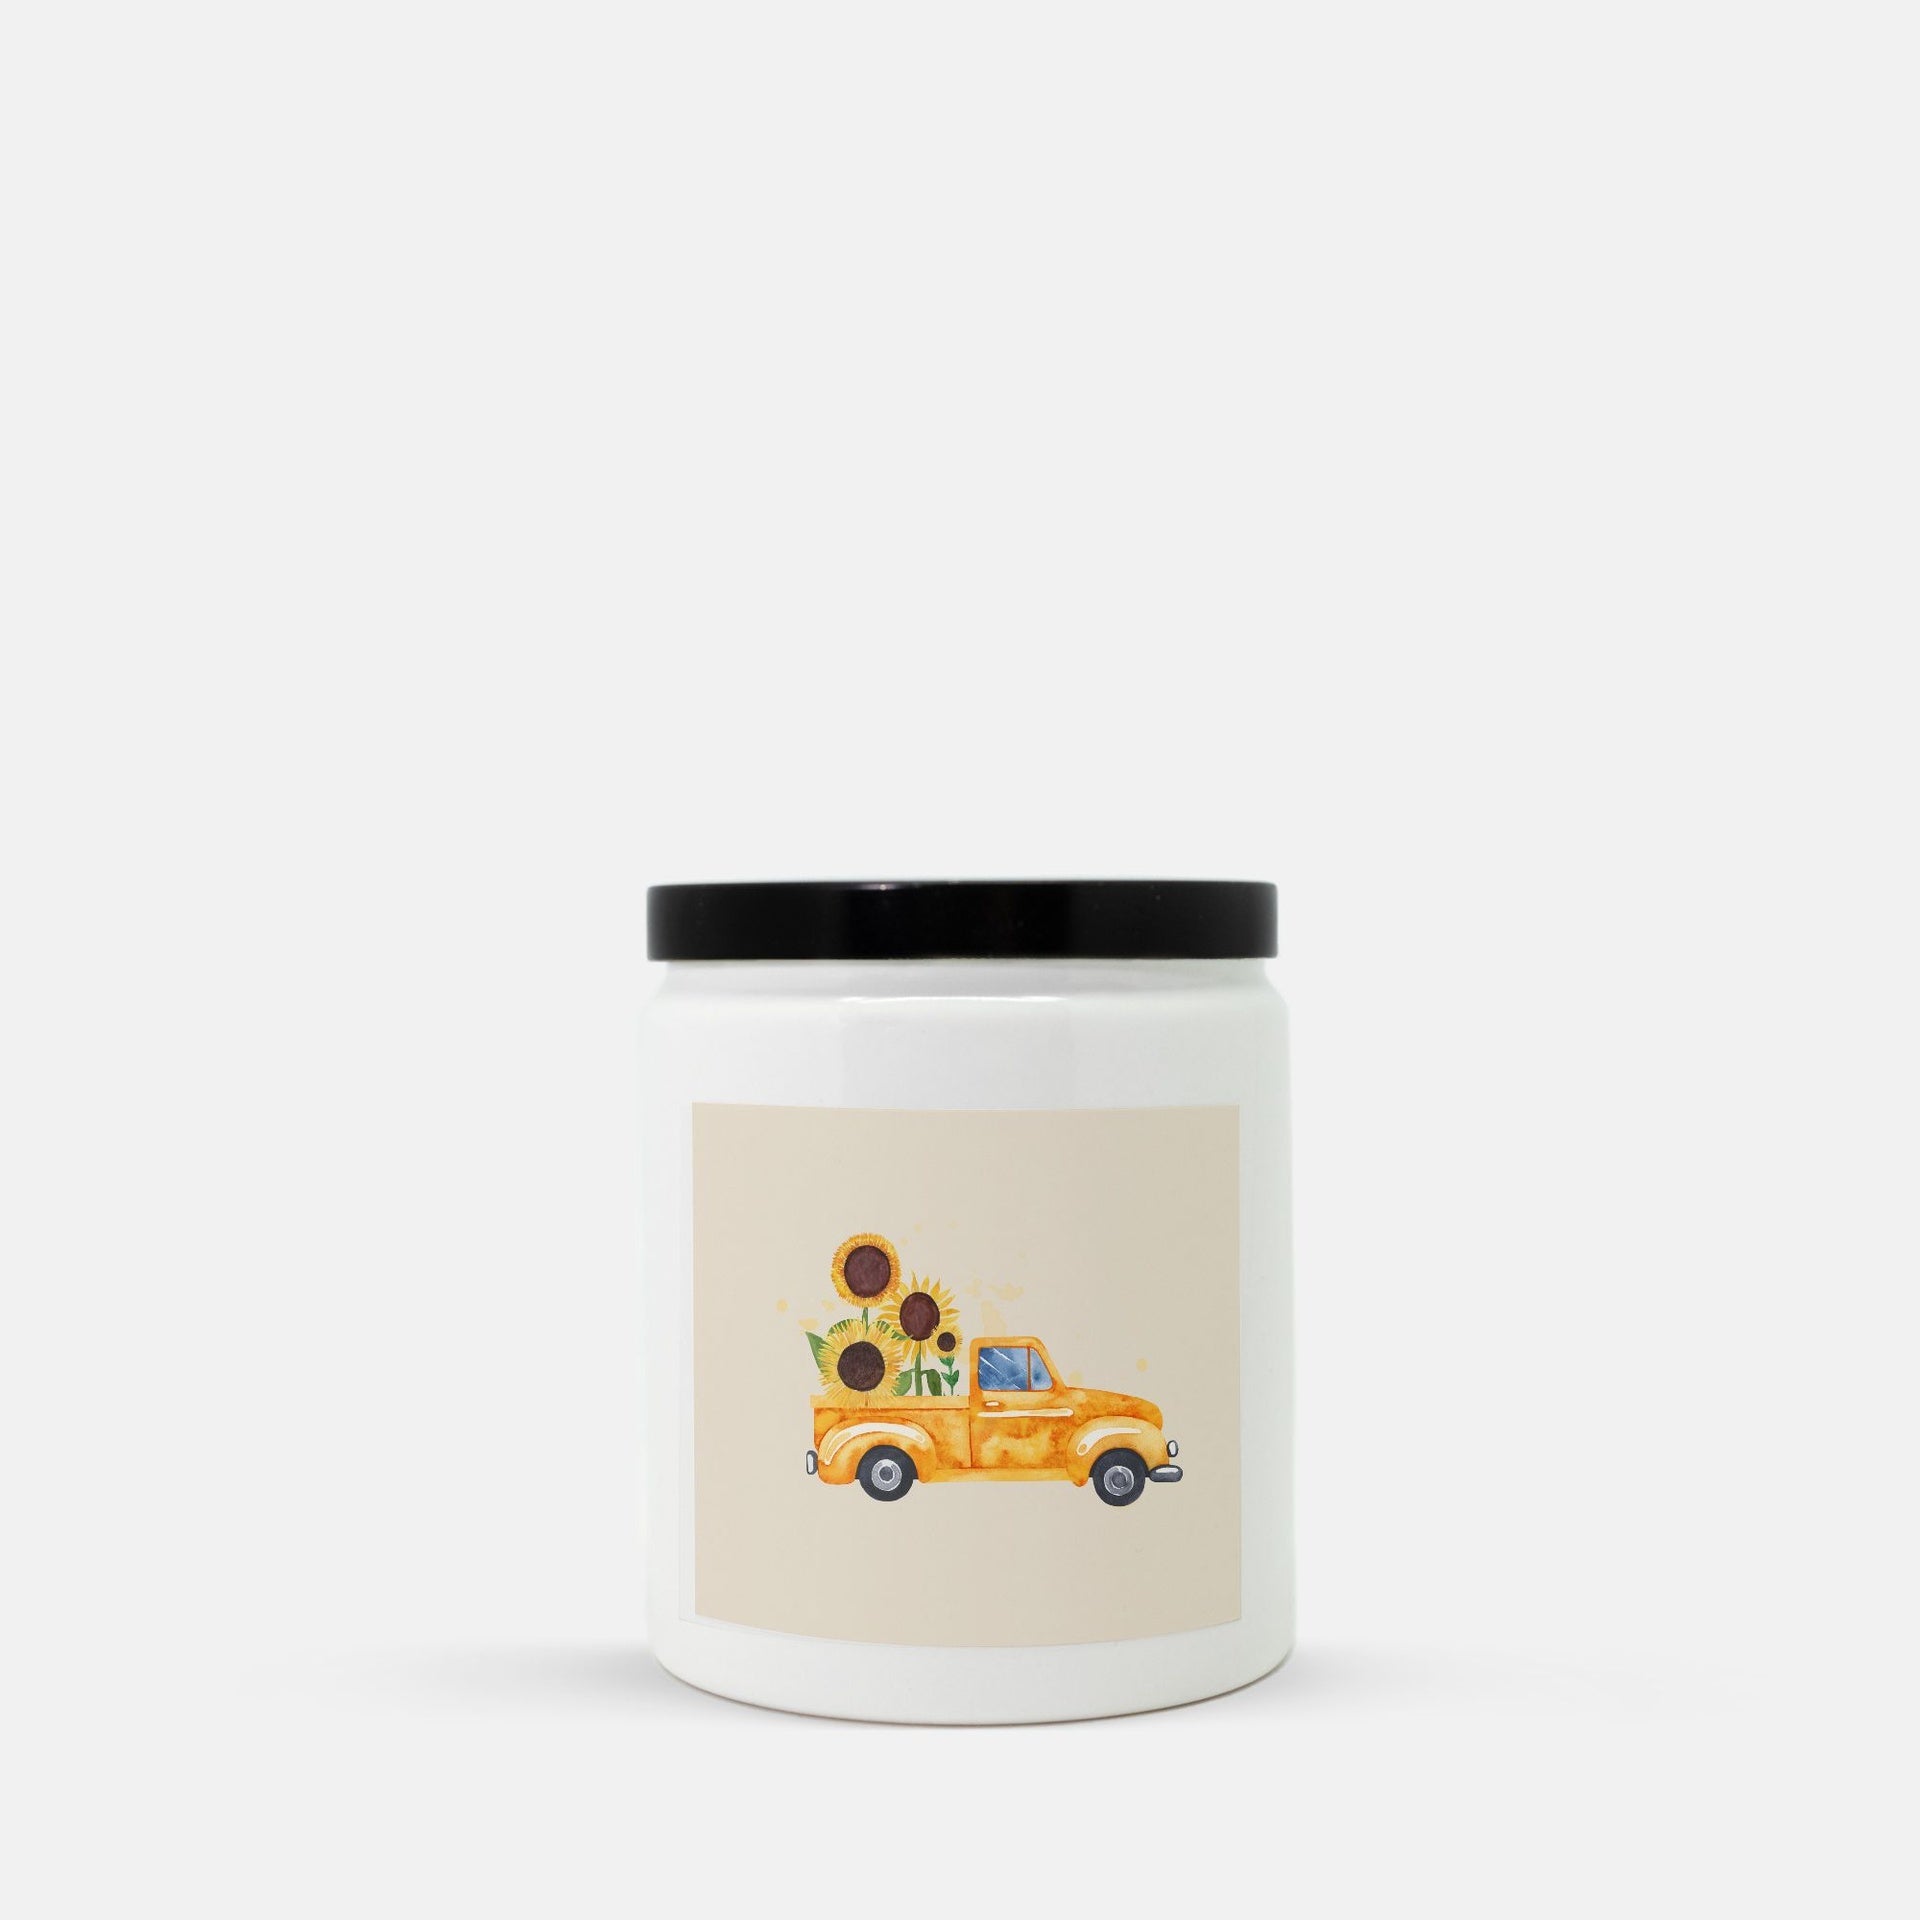 Lifestyle Details - Orange Rustic Truck & Sunflowers Ceramic Candle w Black Lid - Macintosh